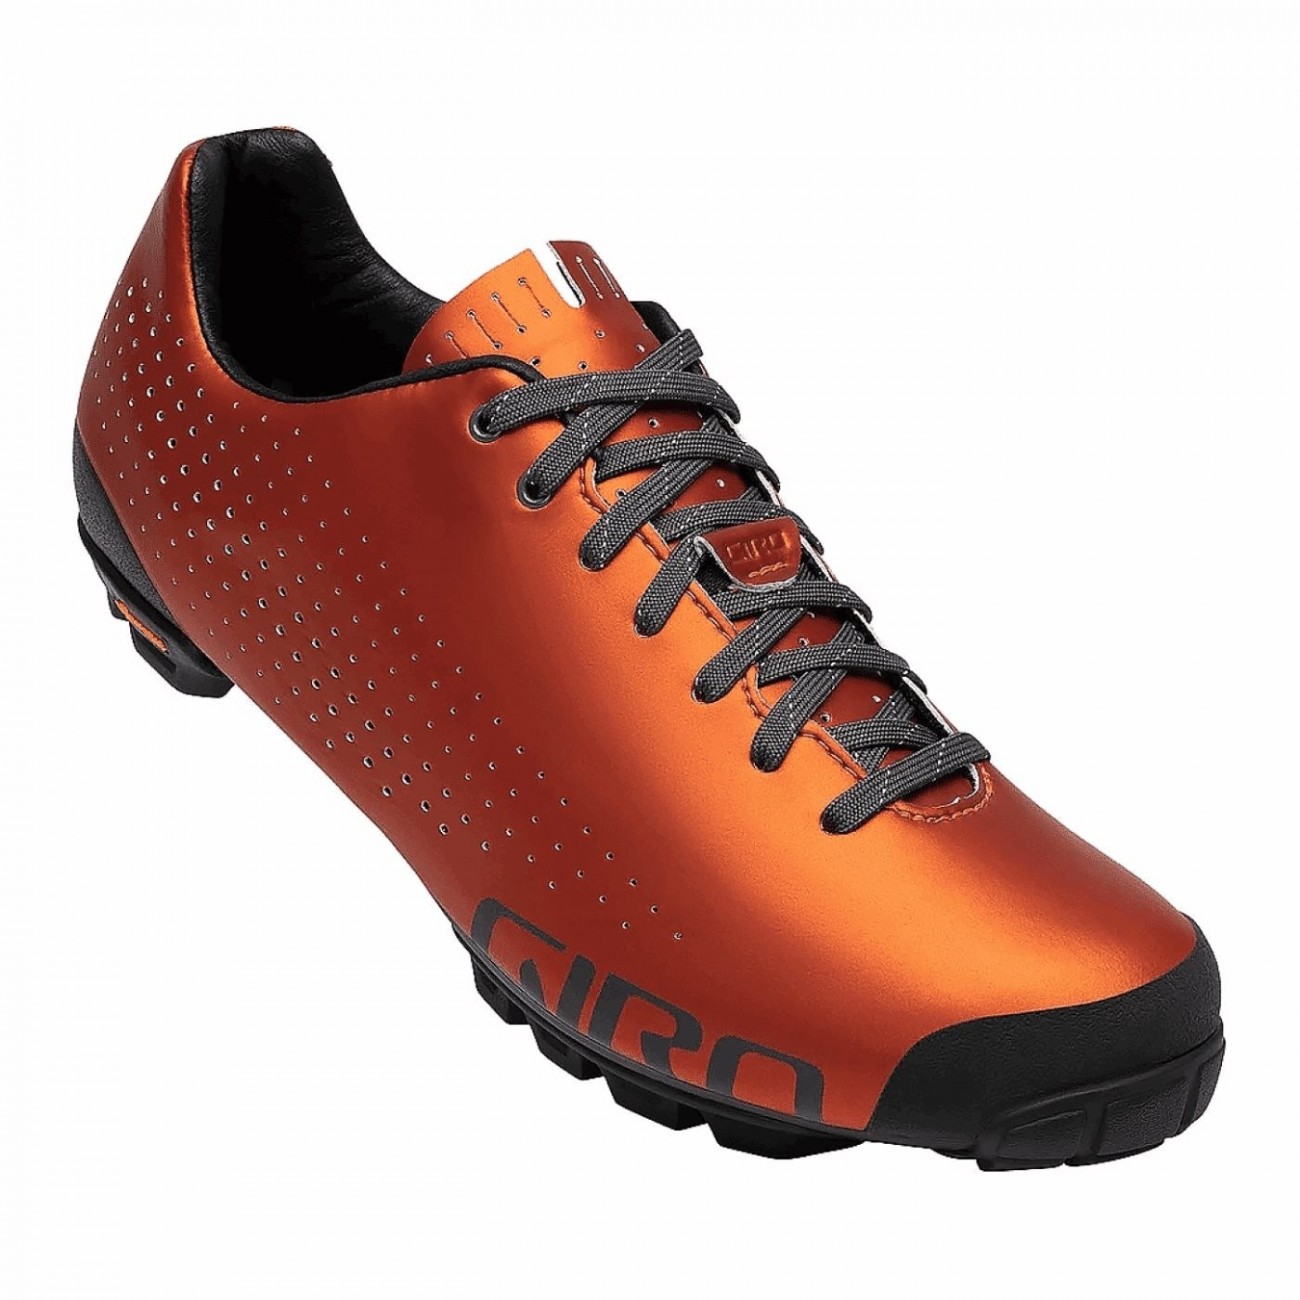 Zapatos empire vr90 rojo/naranja metalizado talla 47 - 1